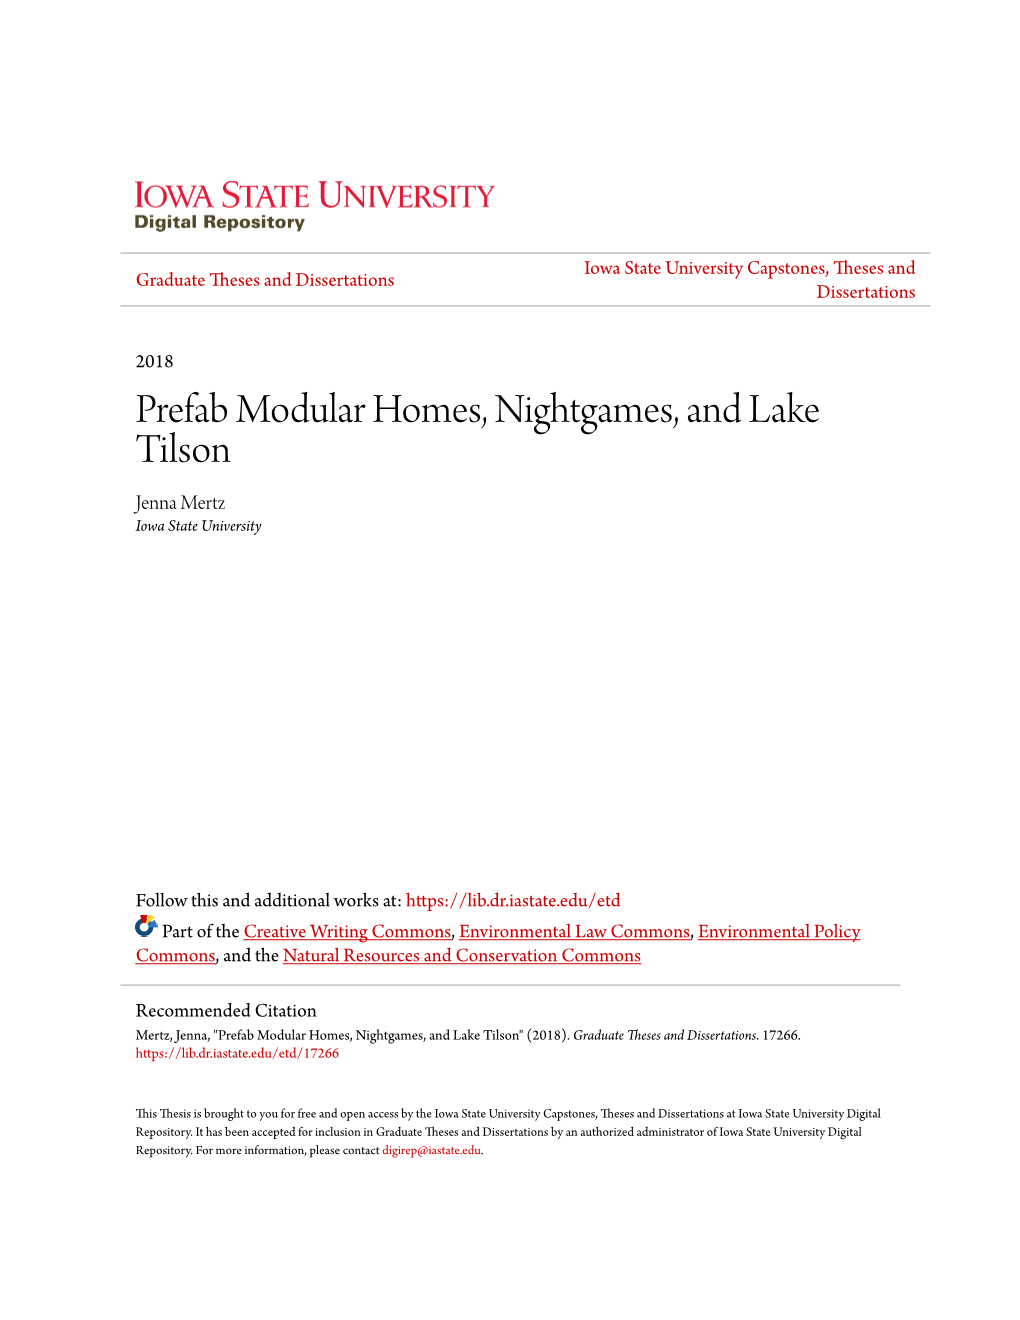 Prefab Modular Homes, Nightgames, and Lake Tilson Jenna Mertz Iowa State University